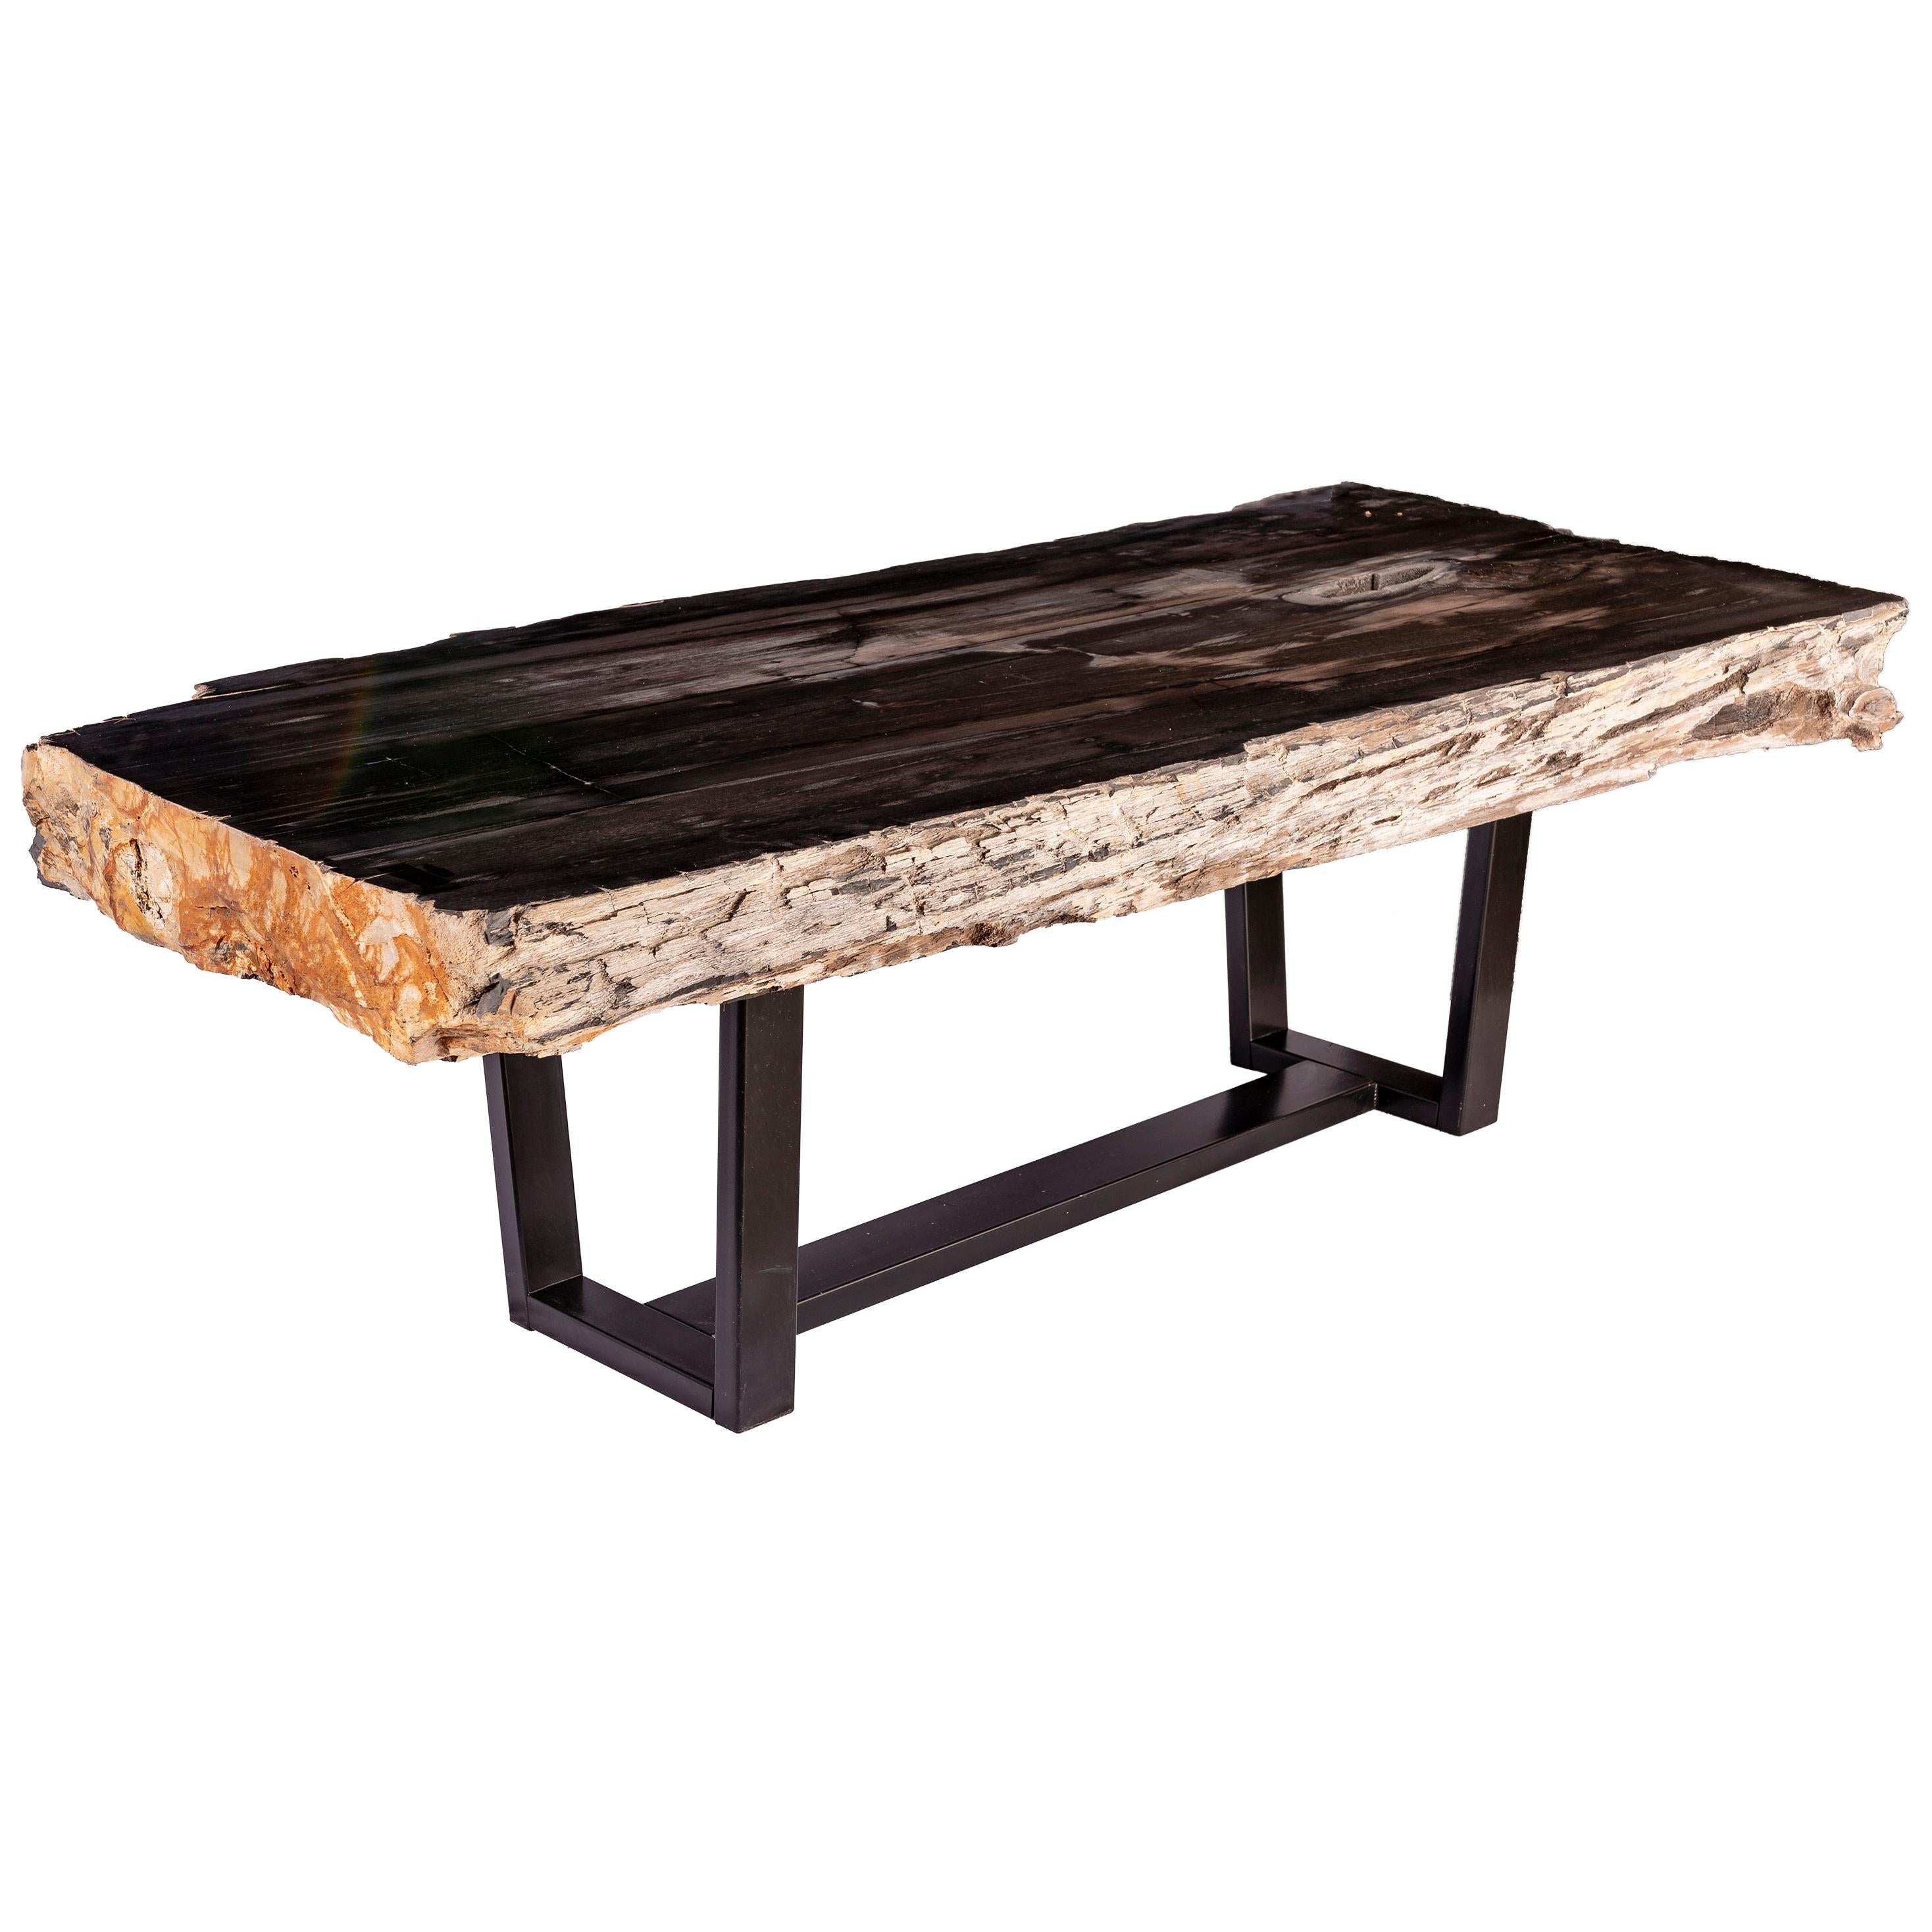 Polished Center of Coffee Table, Rectangular Shape, Petrified Wood with Metal Base